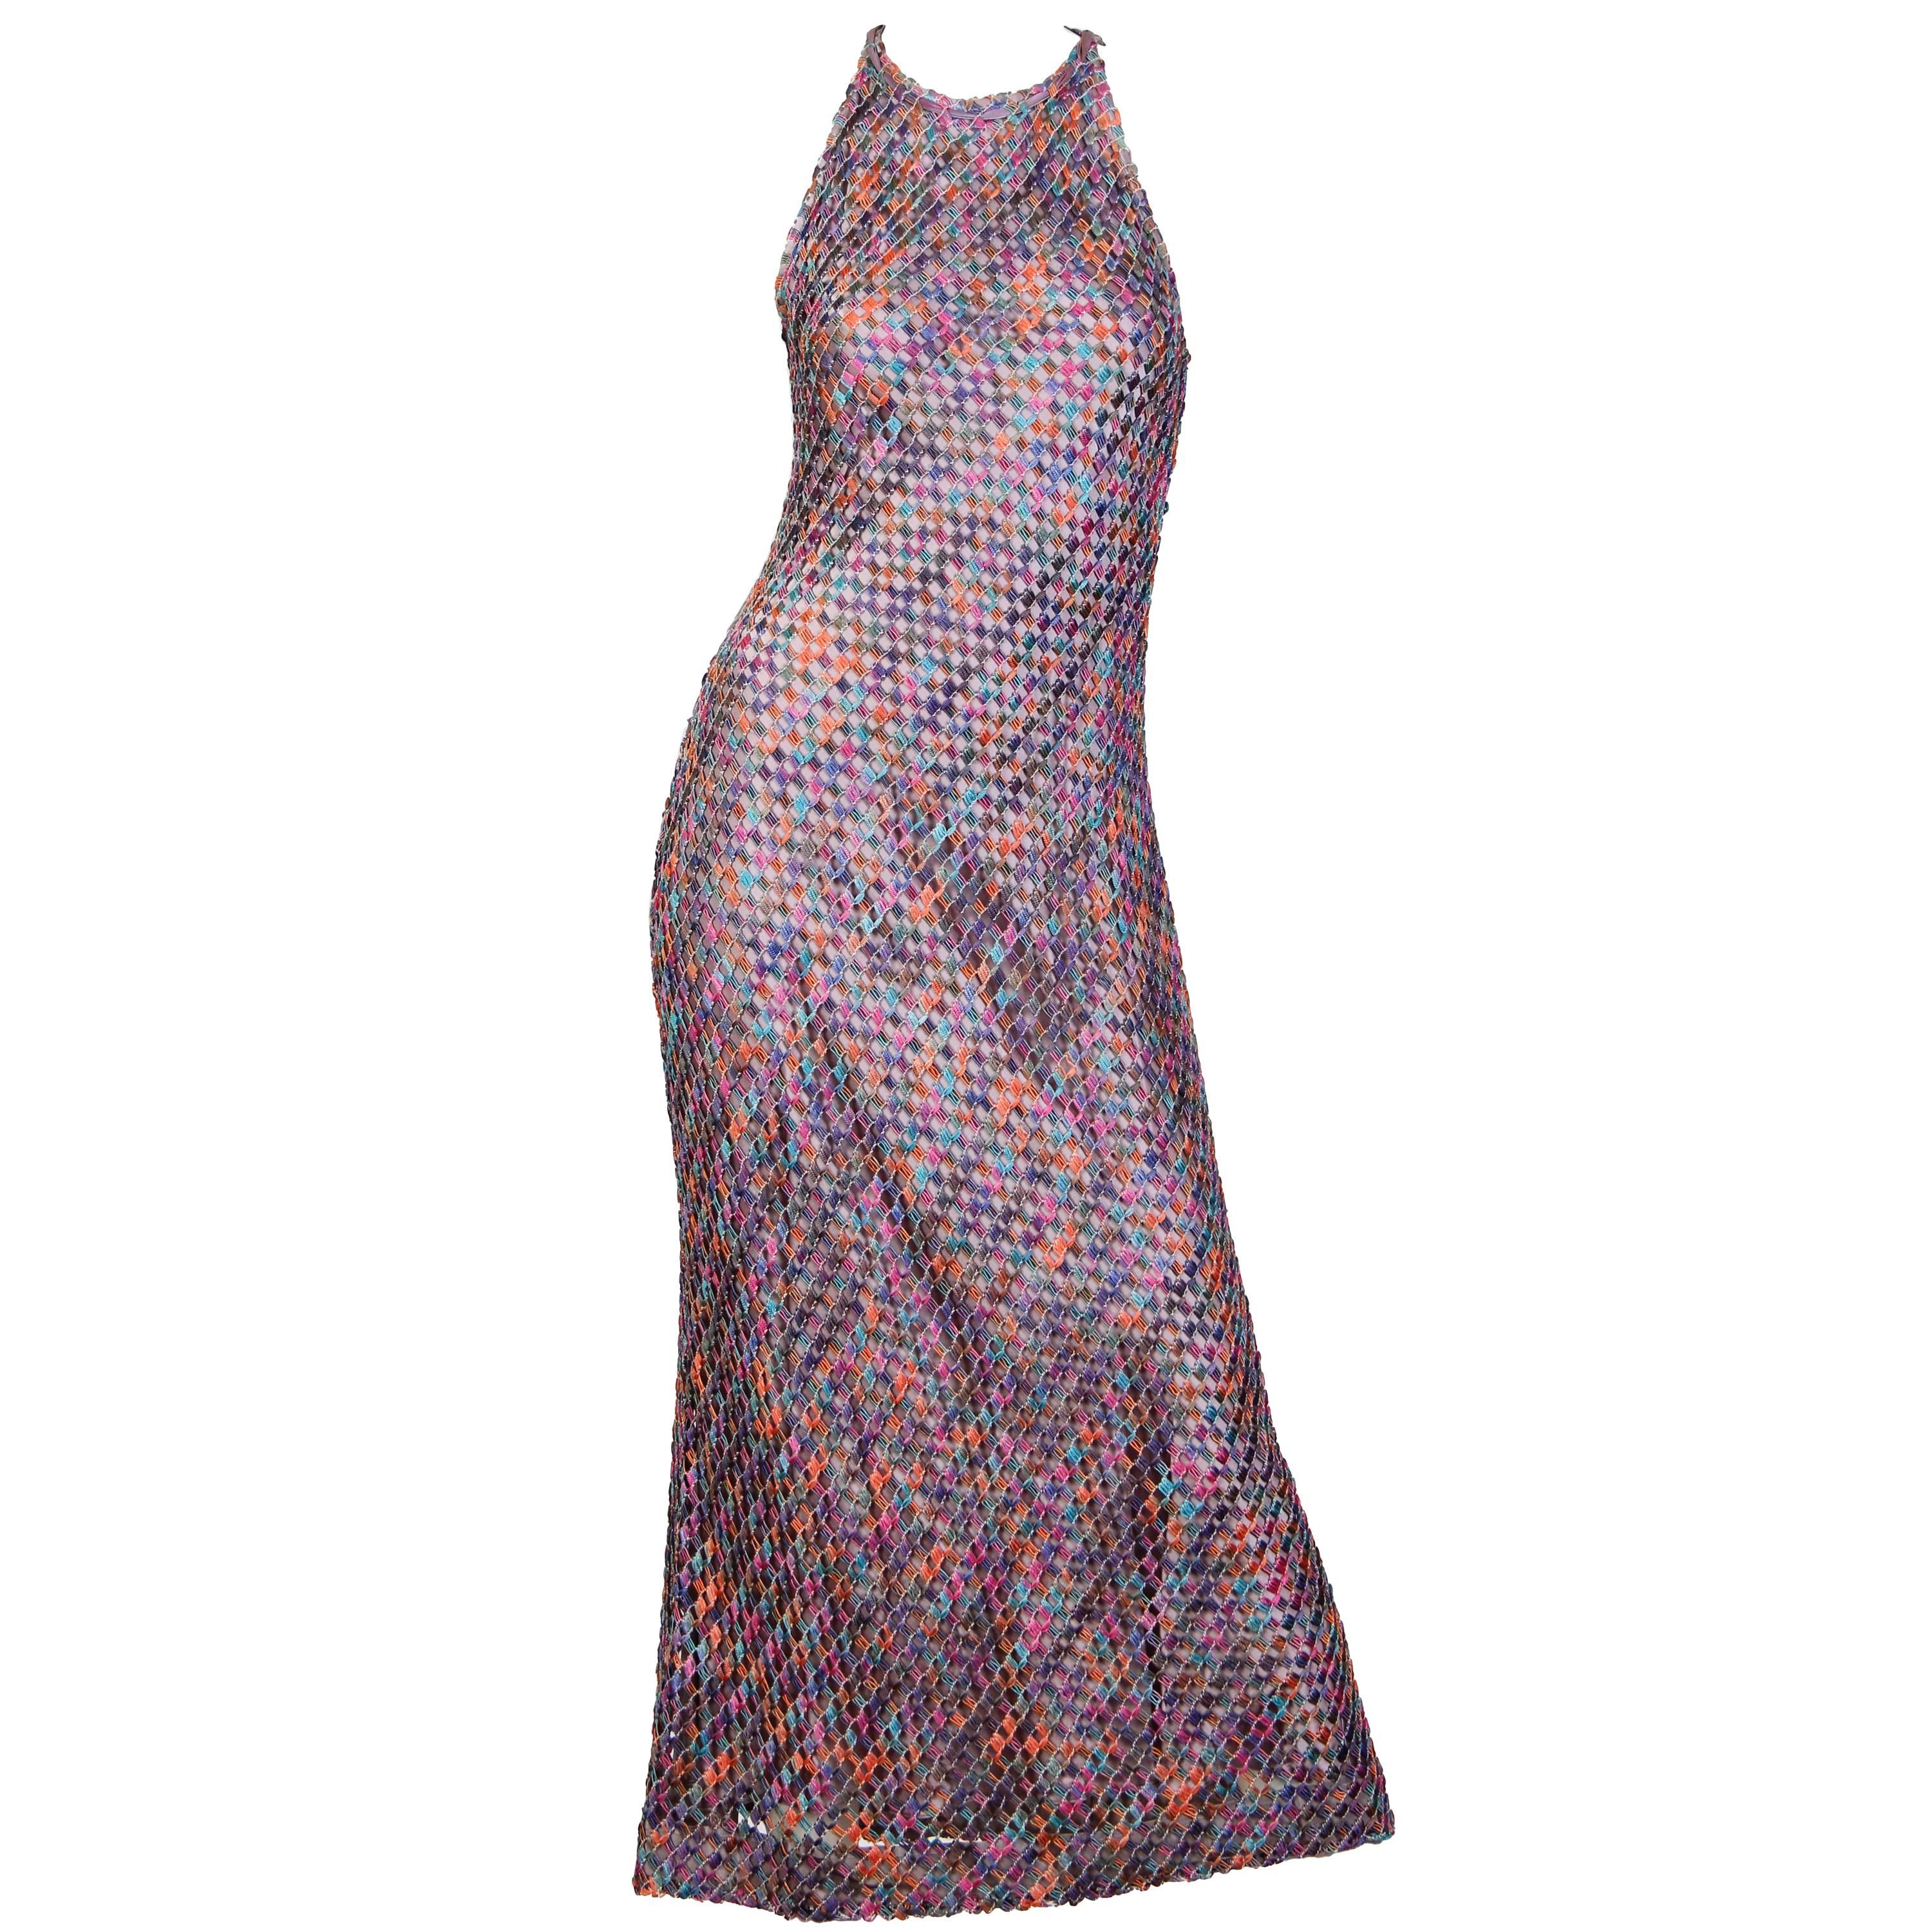 Bias Cut Amy Michelson for Holly Harp Tie-Dye Lace Dress